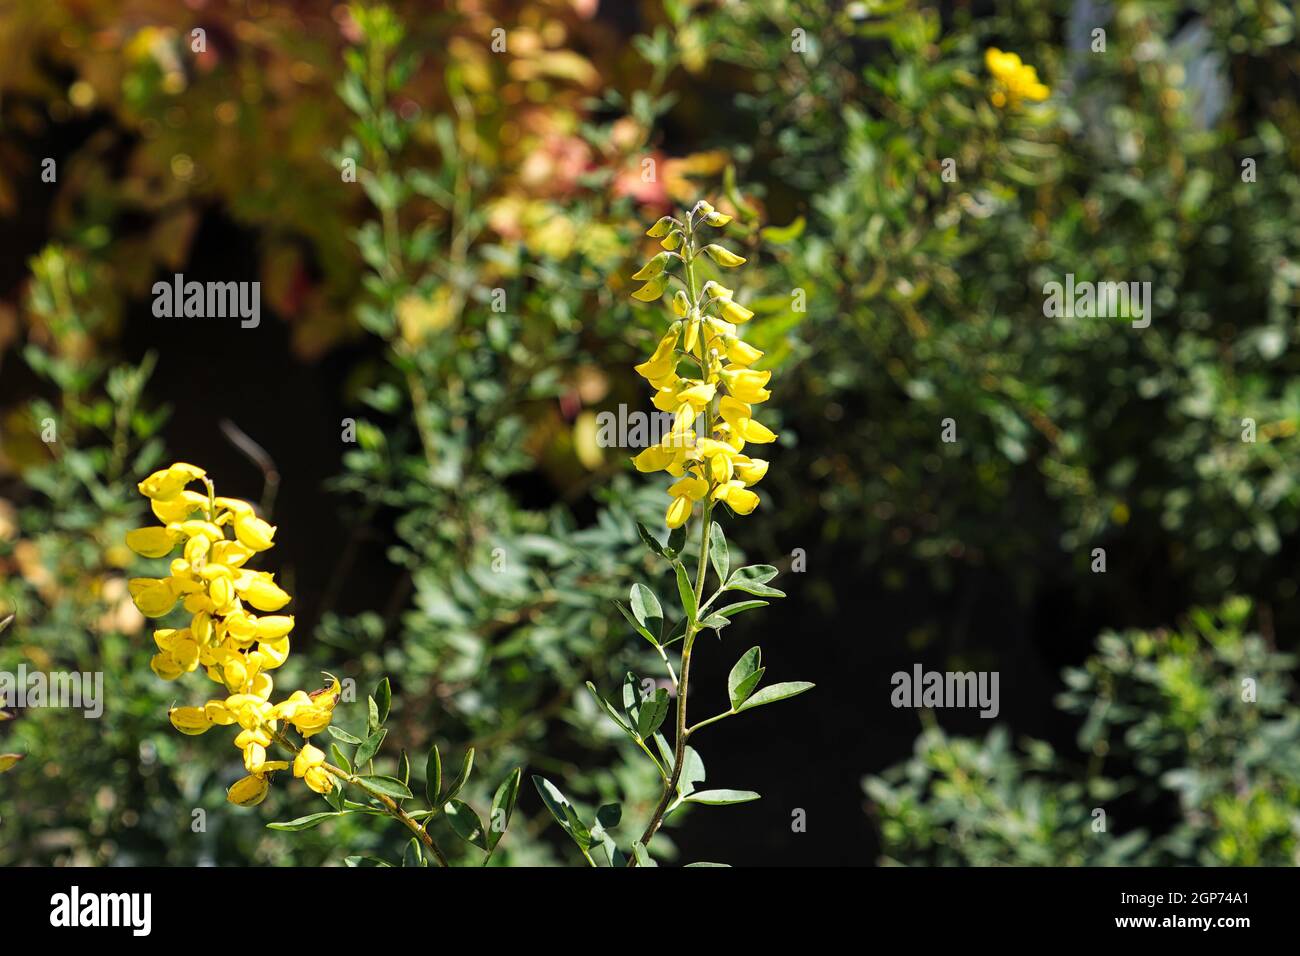 Selective focus on a cyni broom bush with blossoms. Stock Photo